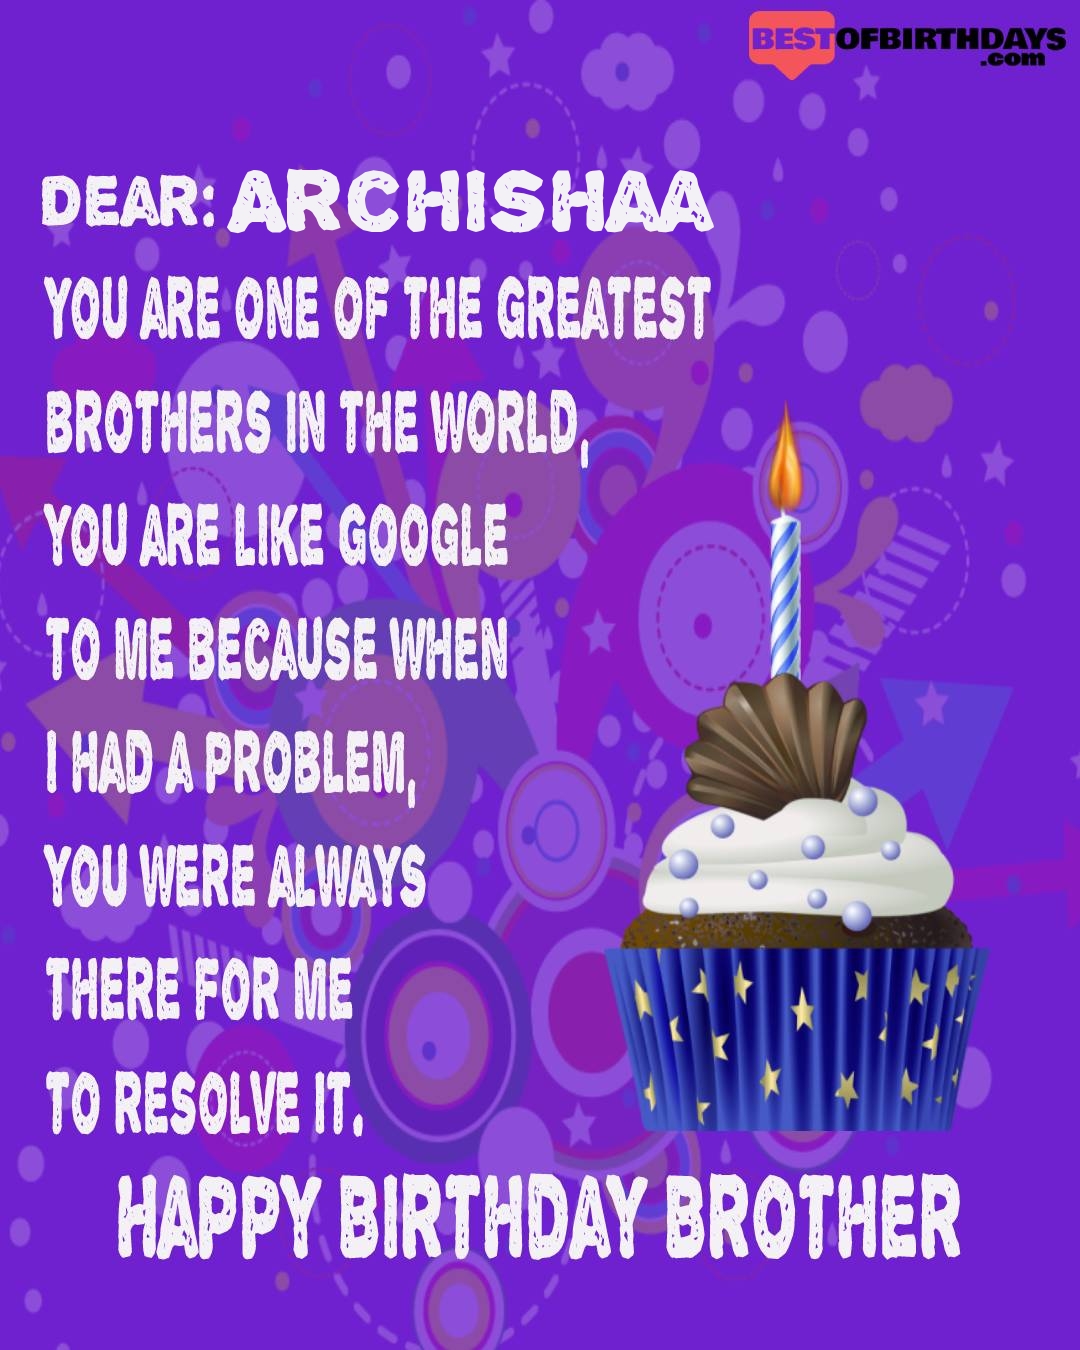 Happy birthday archishaa bhai brother bro